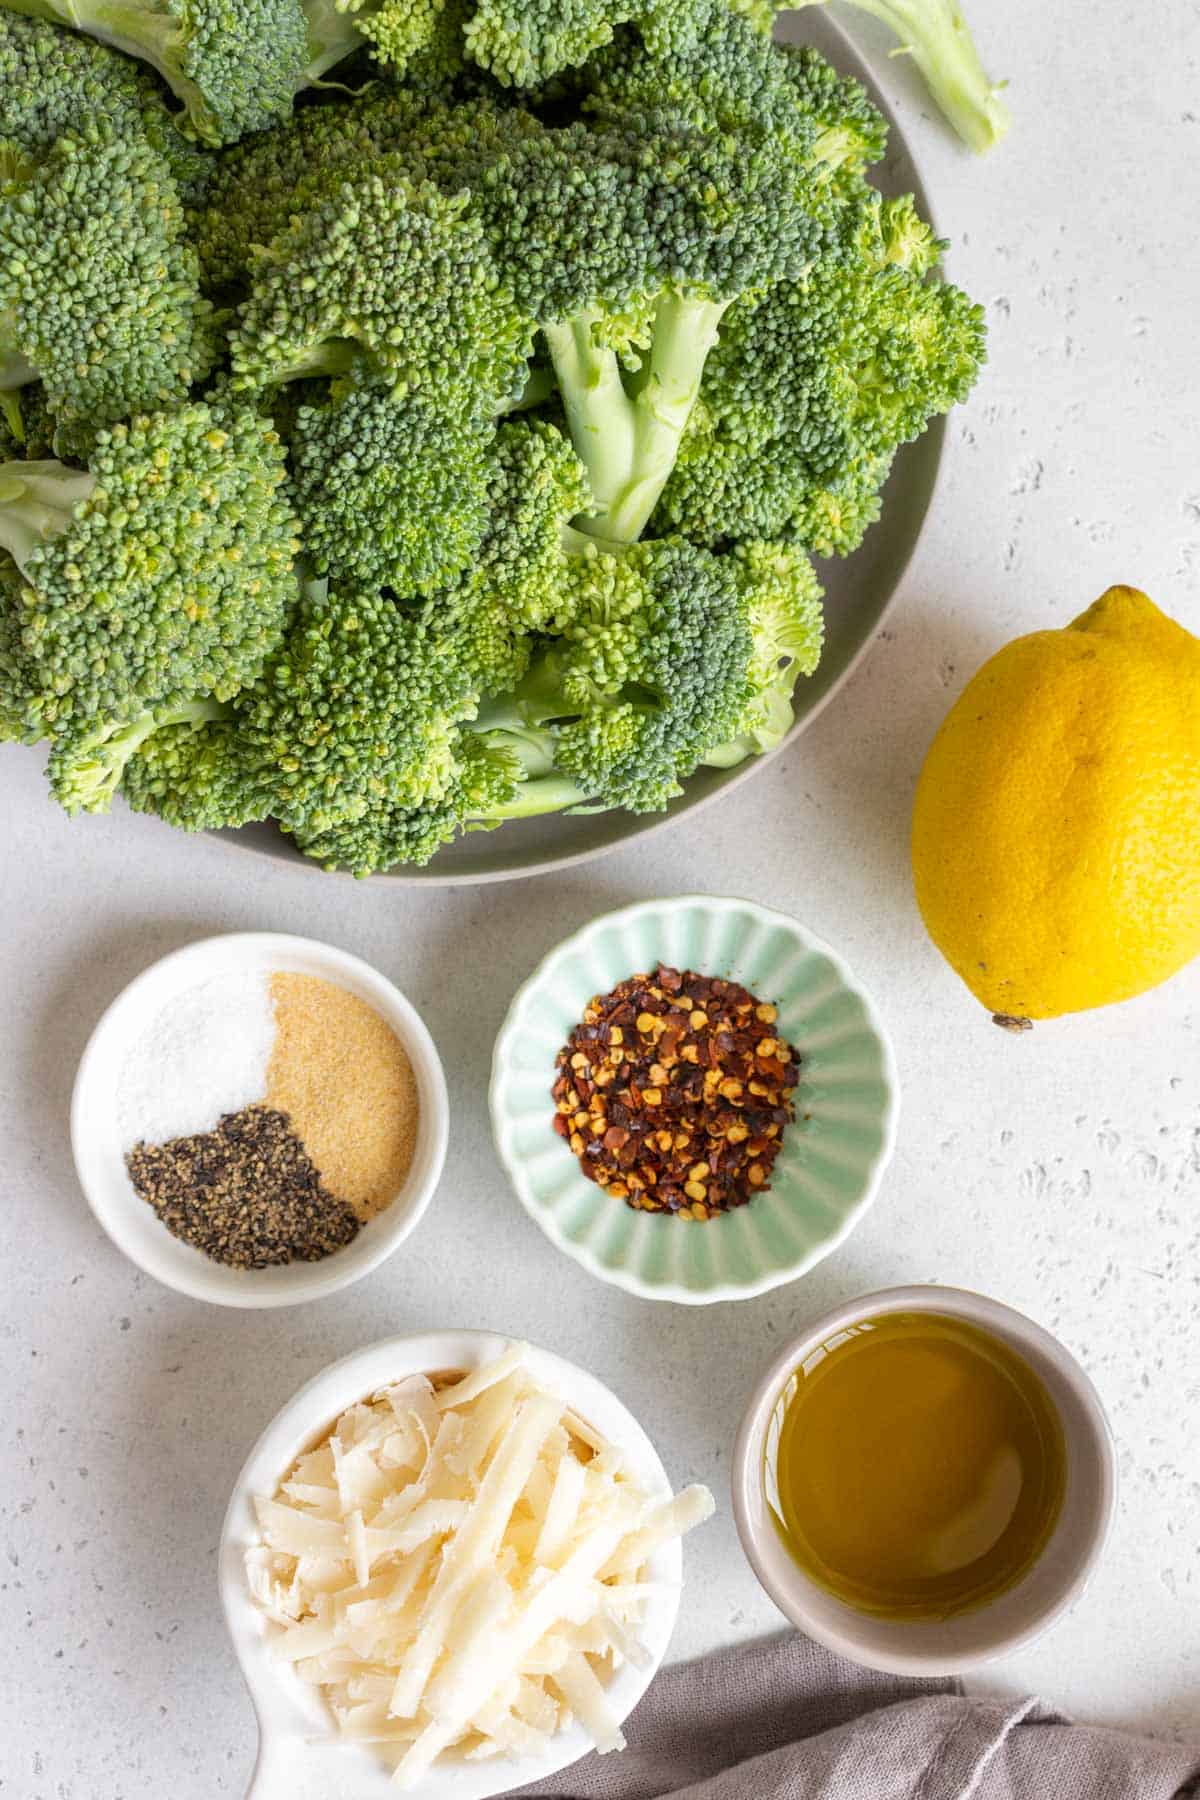 Ingredients needed to make smashed broccoli.